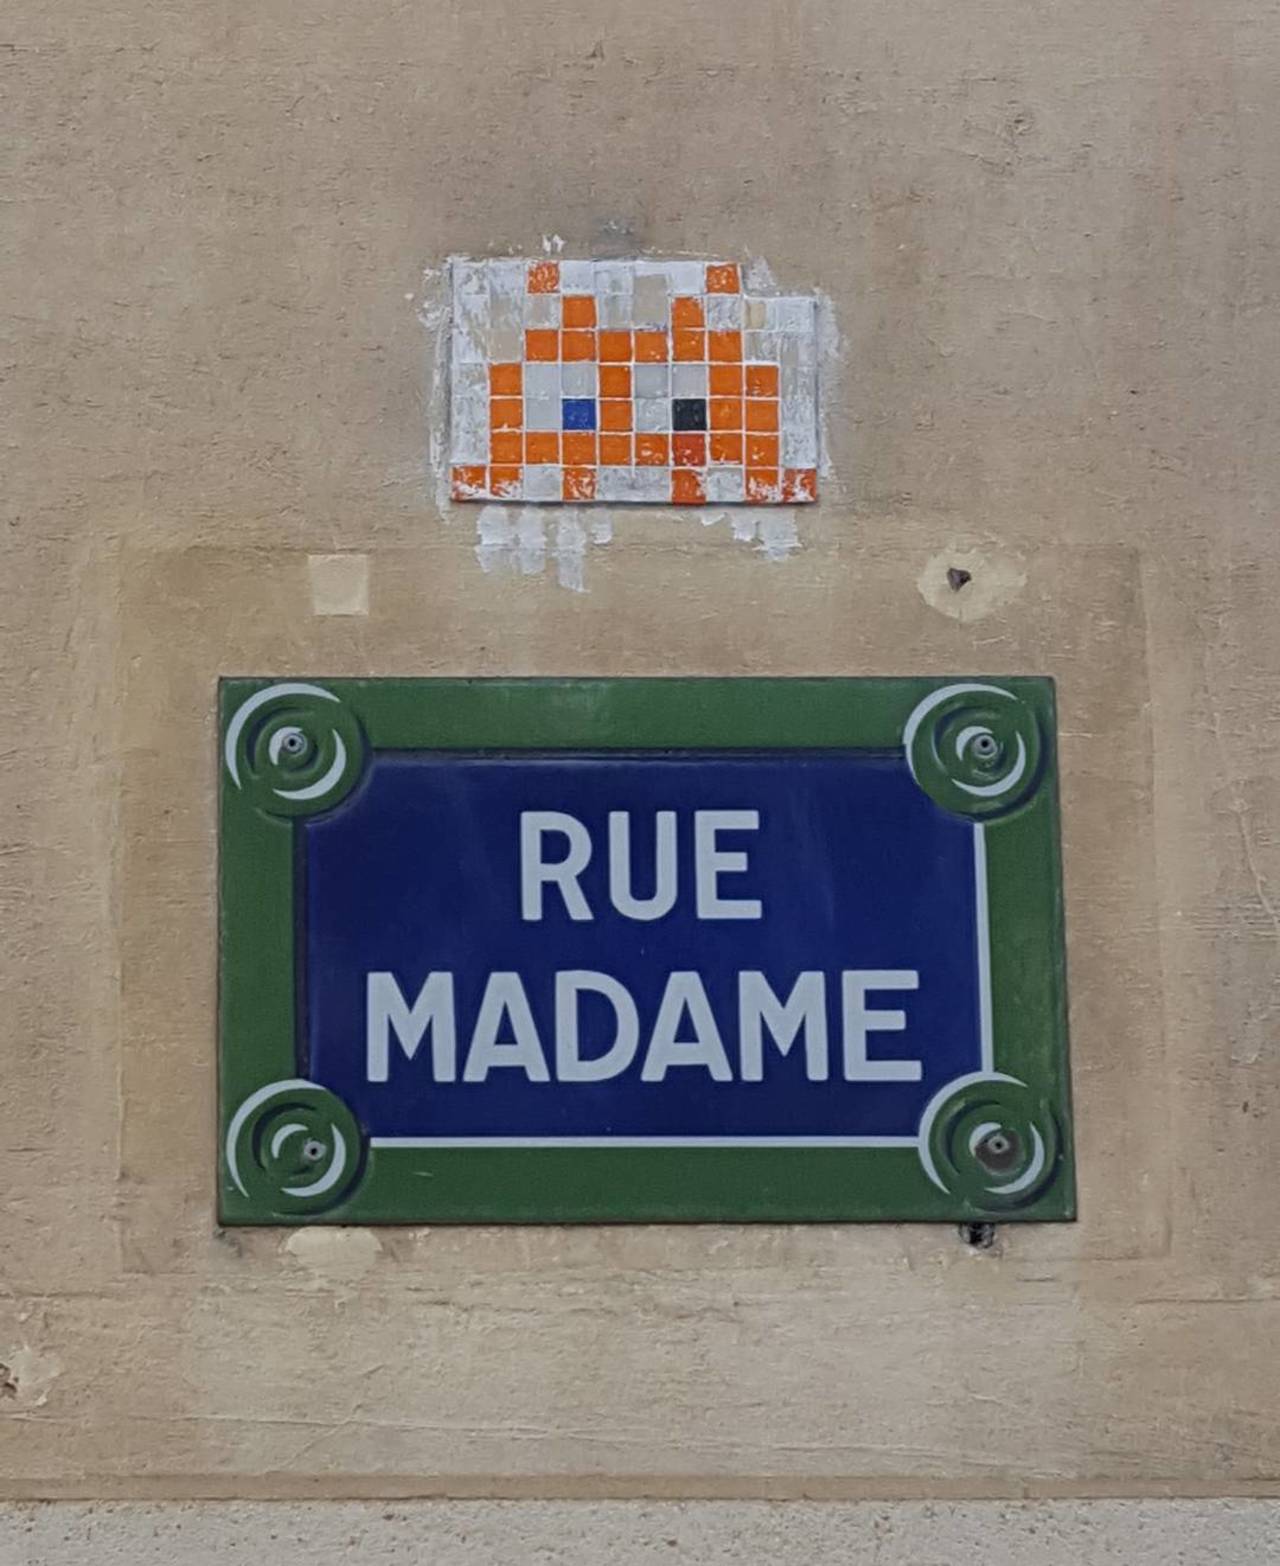 #Paris #graffiti photo by @jdewey67 http://ift.tt/1QHZNK8 #StreetArt http://t.co/trX7qOMV4w